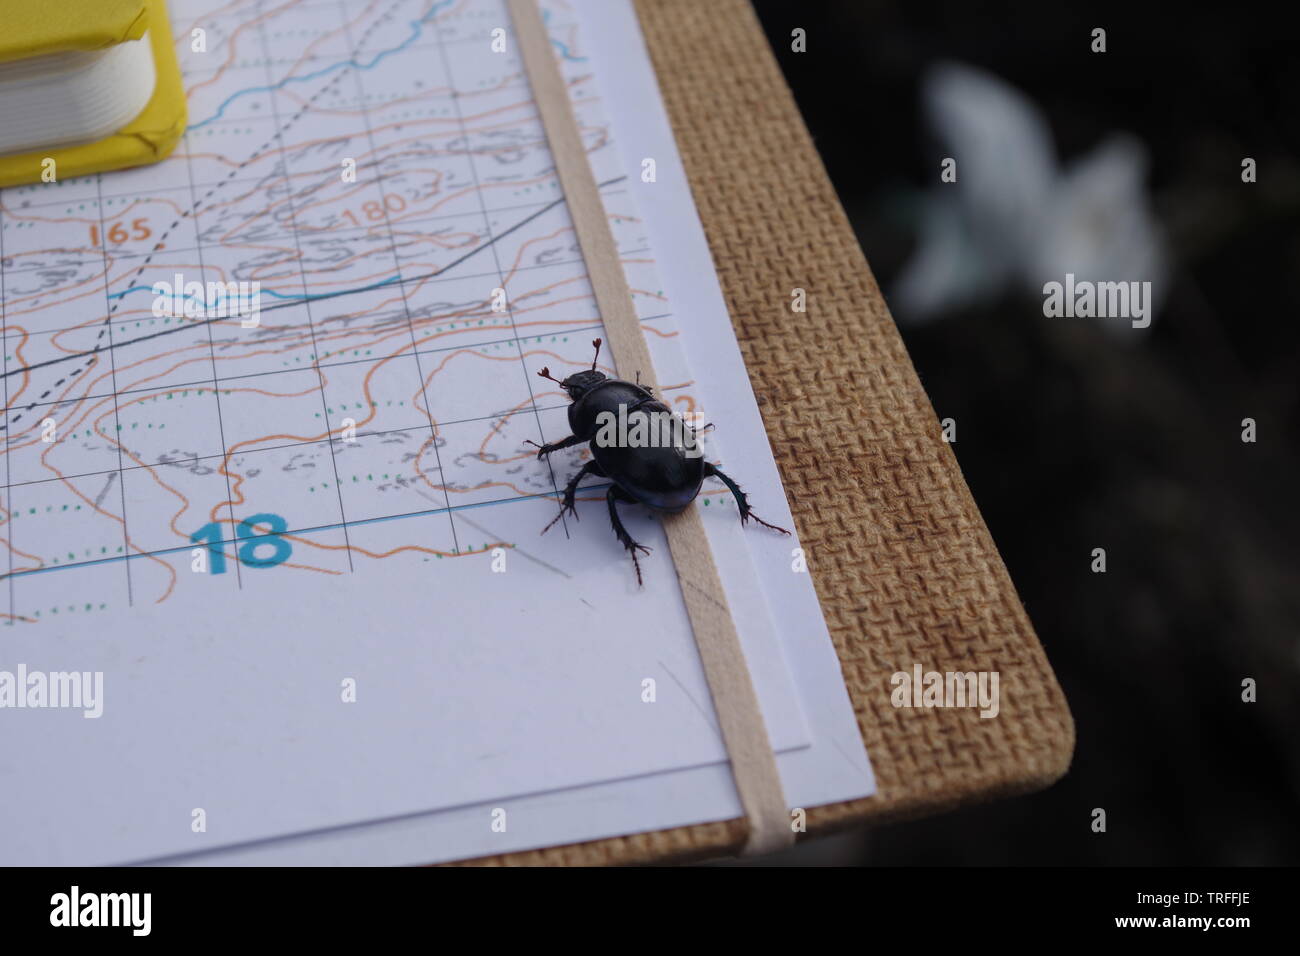 Dung Beetle (Scarabaeus sacer), Irridescent Blue Beetle on a Mapping Board. Isle of Skye, Scotland, UK. Stock Photo